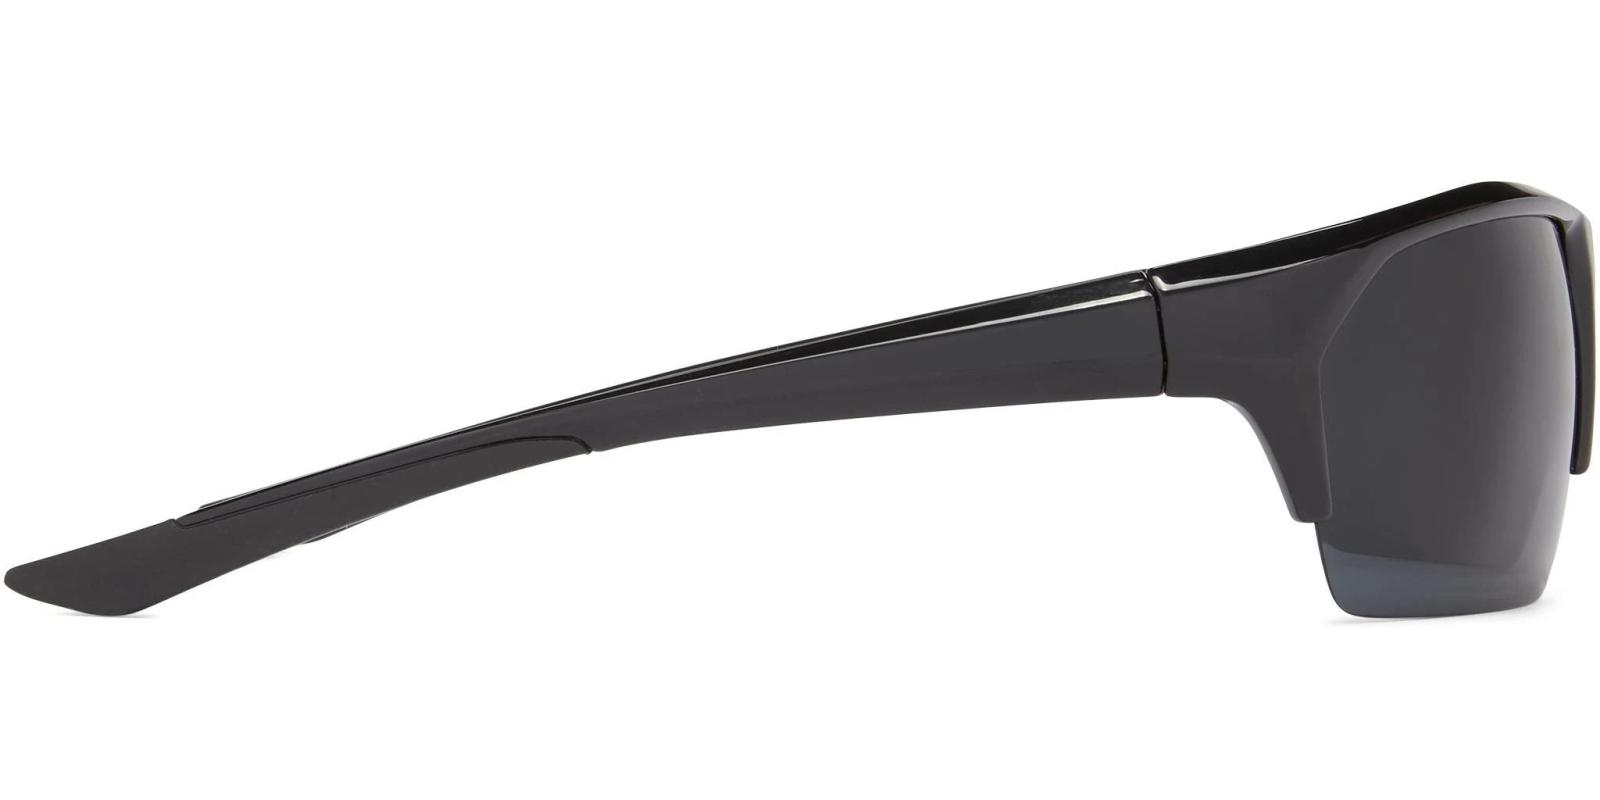 icu Eyewear Ranger Sunglasses